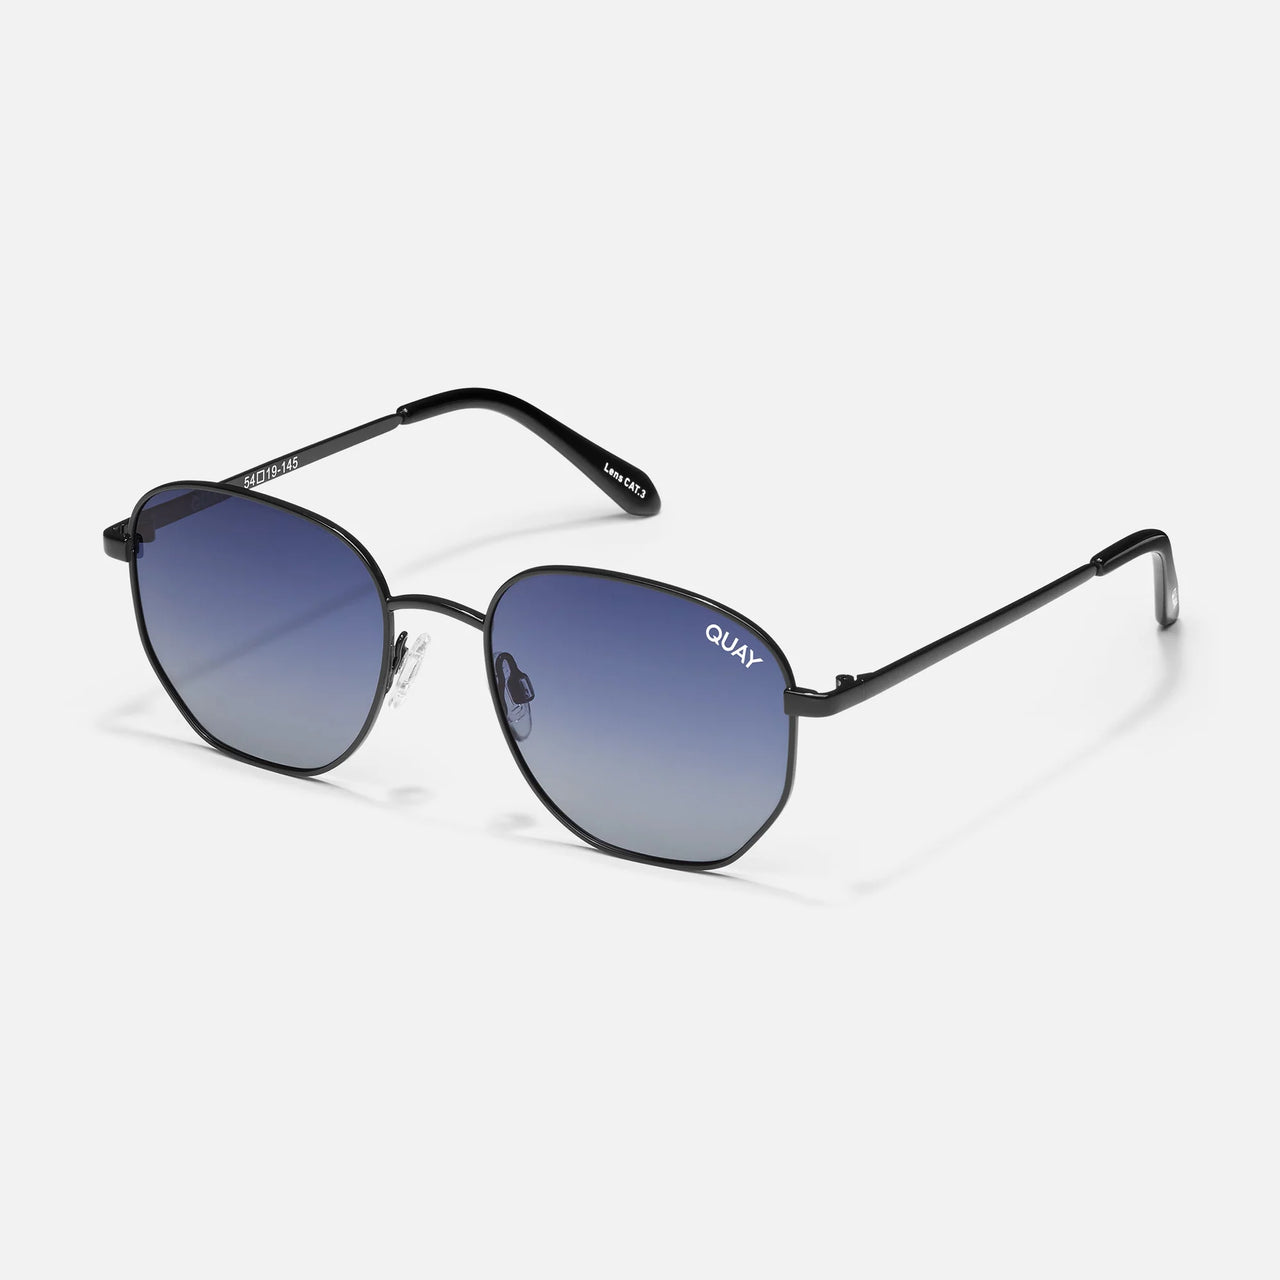 Big Time Black/Navy Polarized Sunglasses, Sunglasses by Quay | LIT Boutique